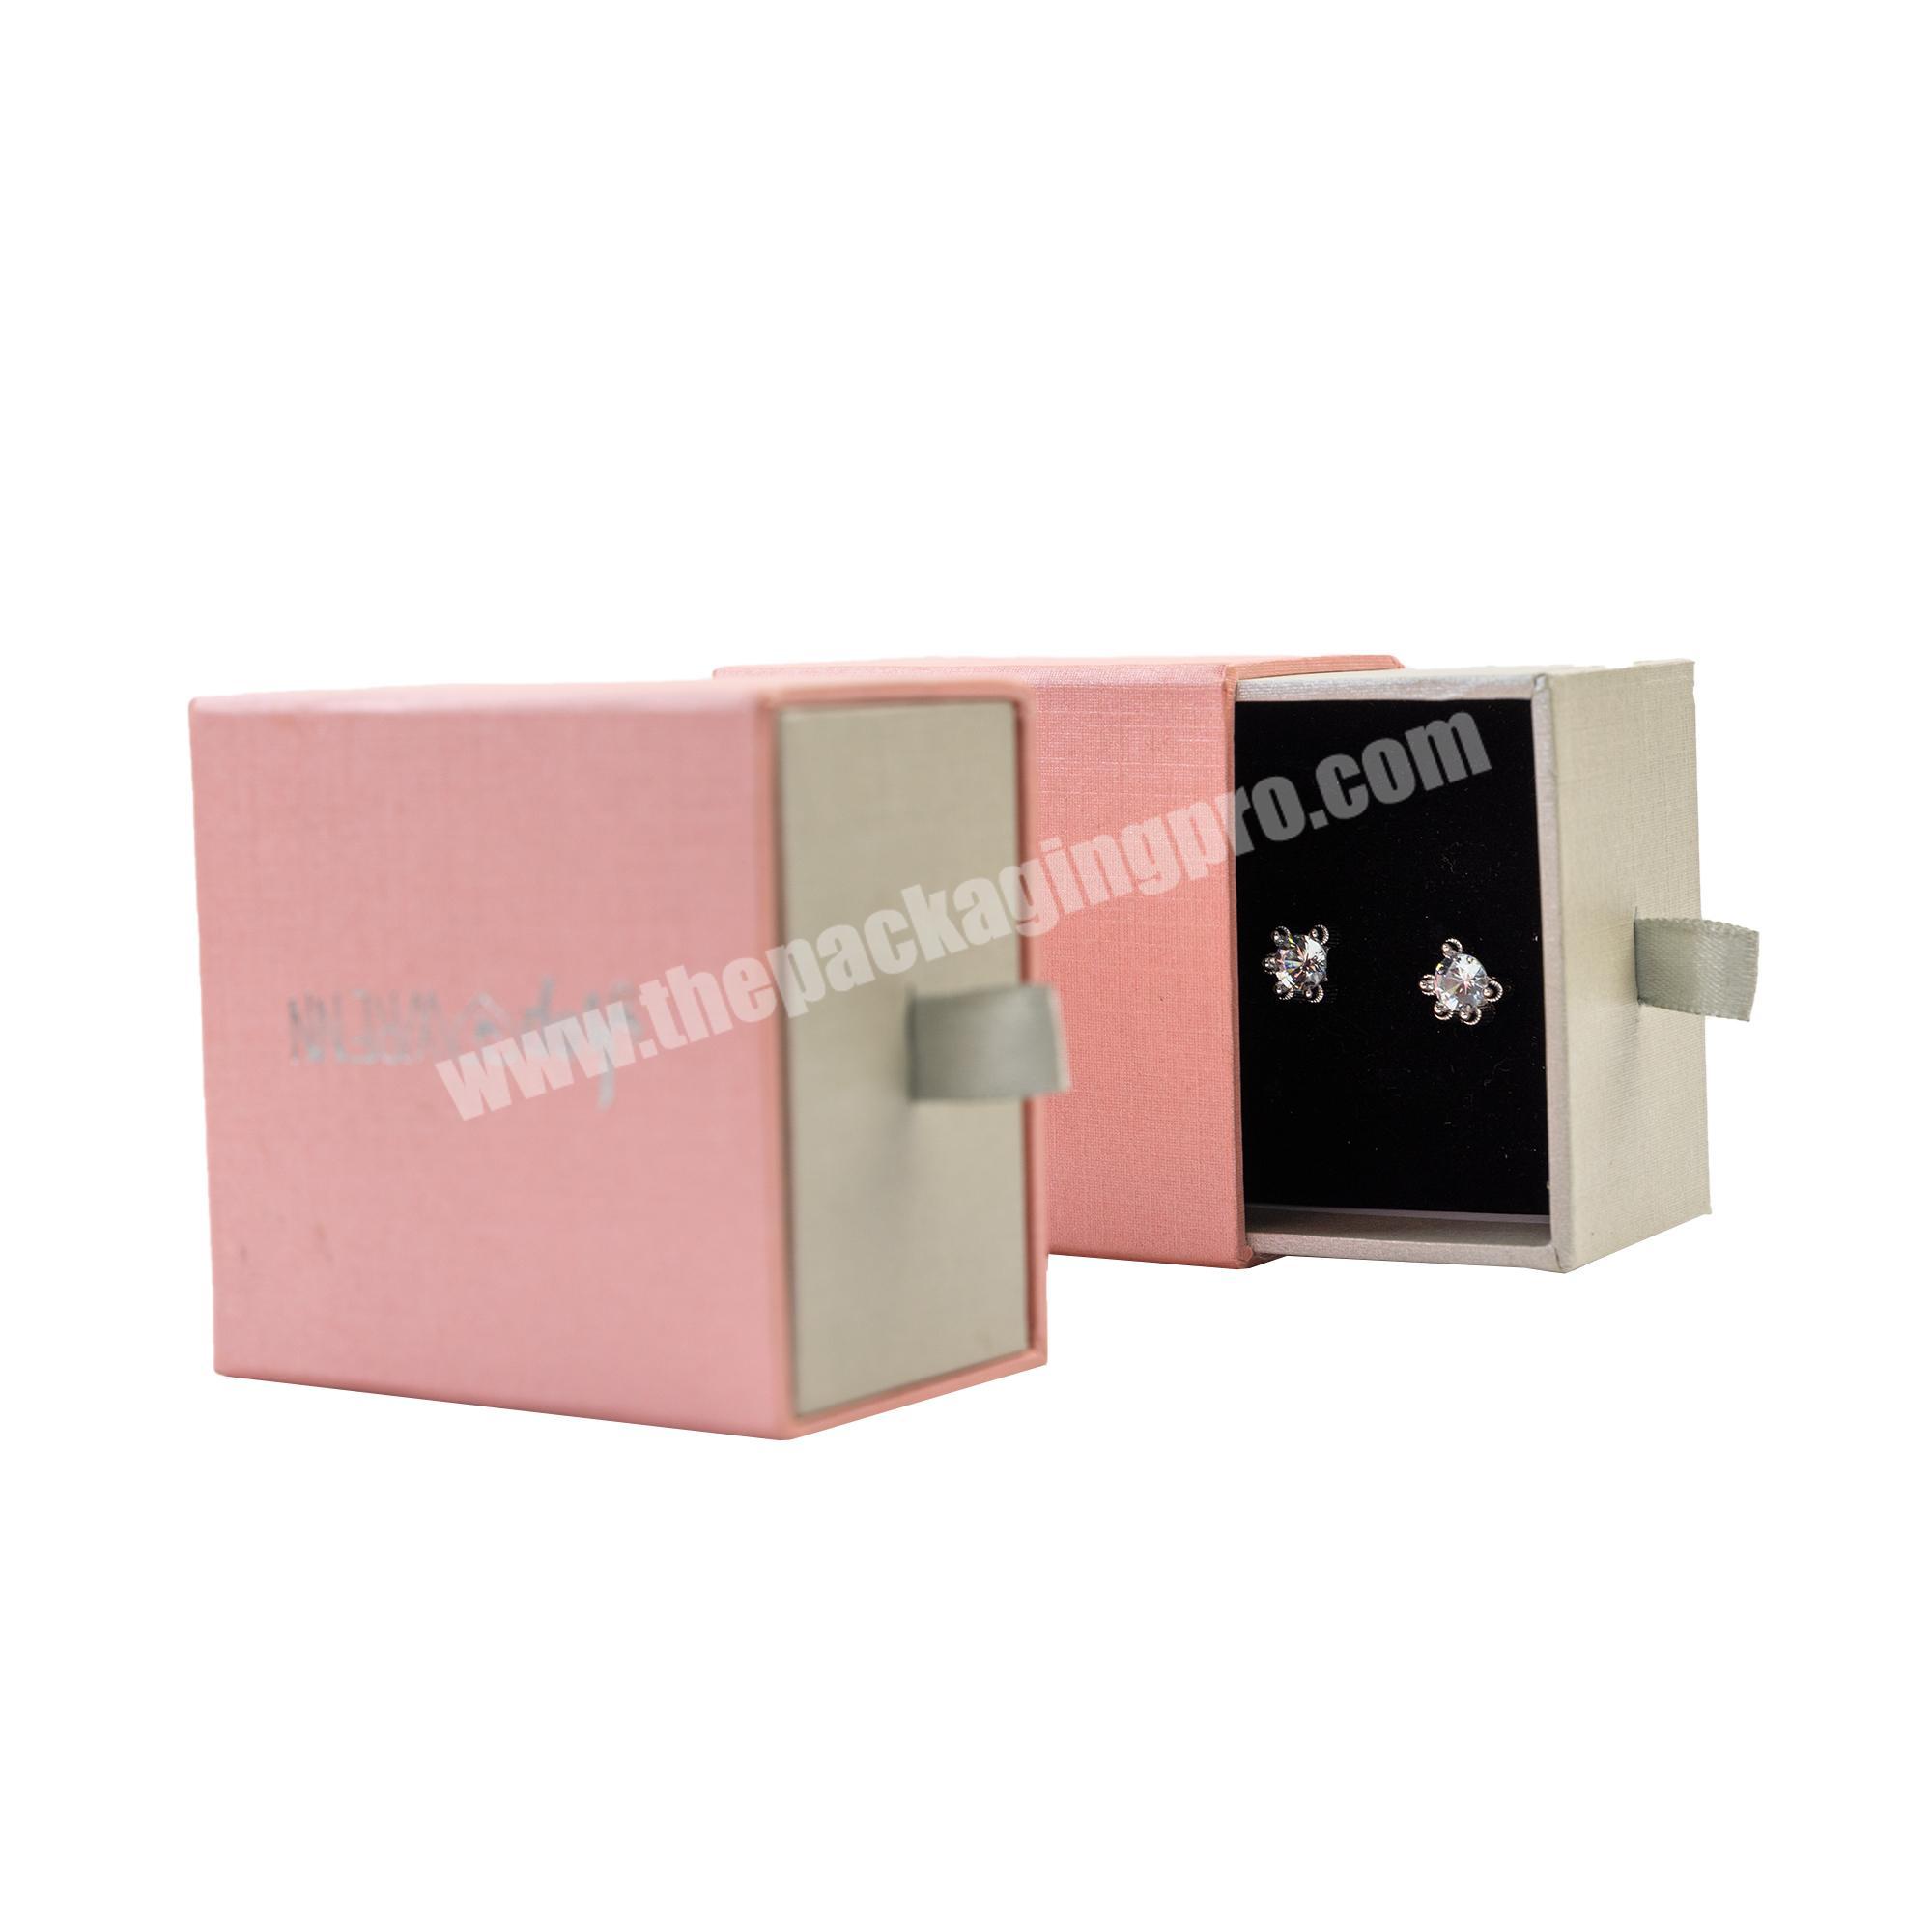 Custom design printed jewellery box magnetic gift box Pink magnetic gift box with eva insert jewellery